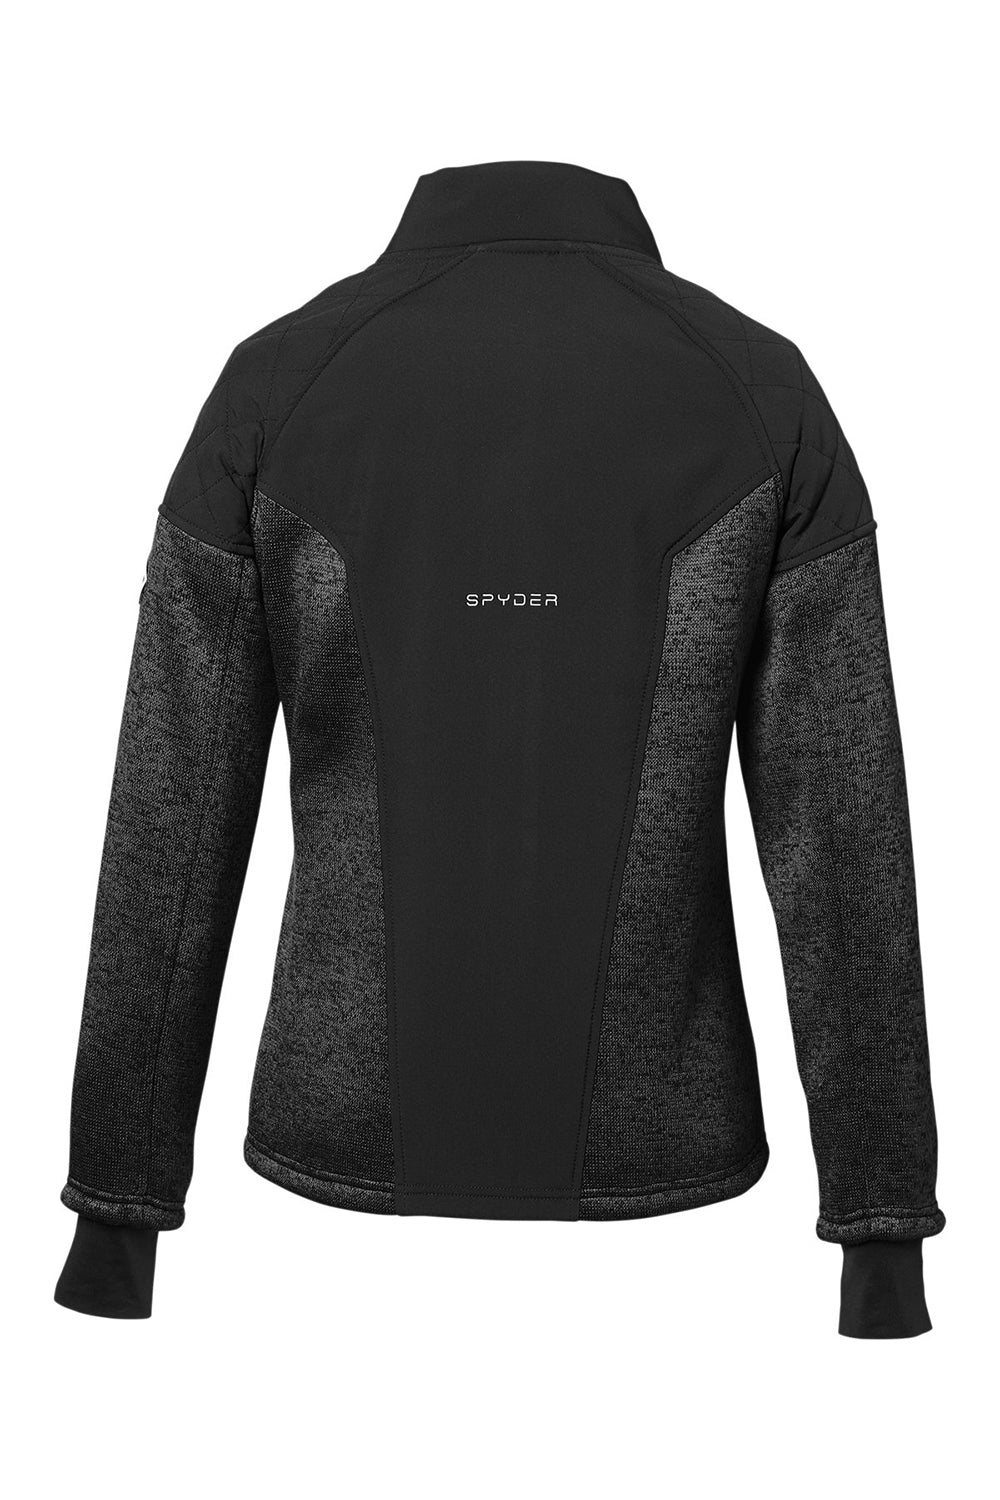 Spyder S17741 Womens Passage Full Zip Sweater Jacket Black Powder/Black Flat Back